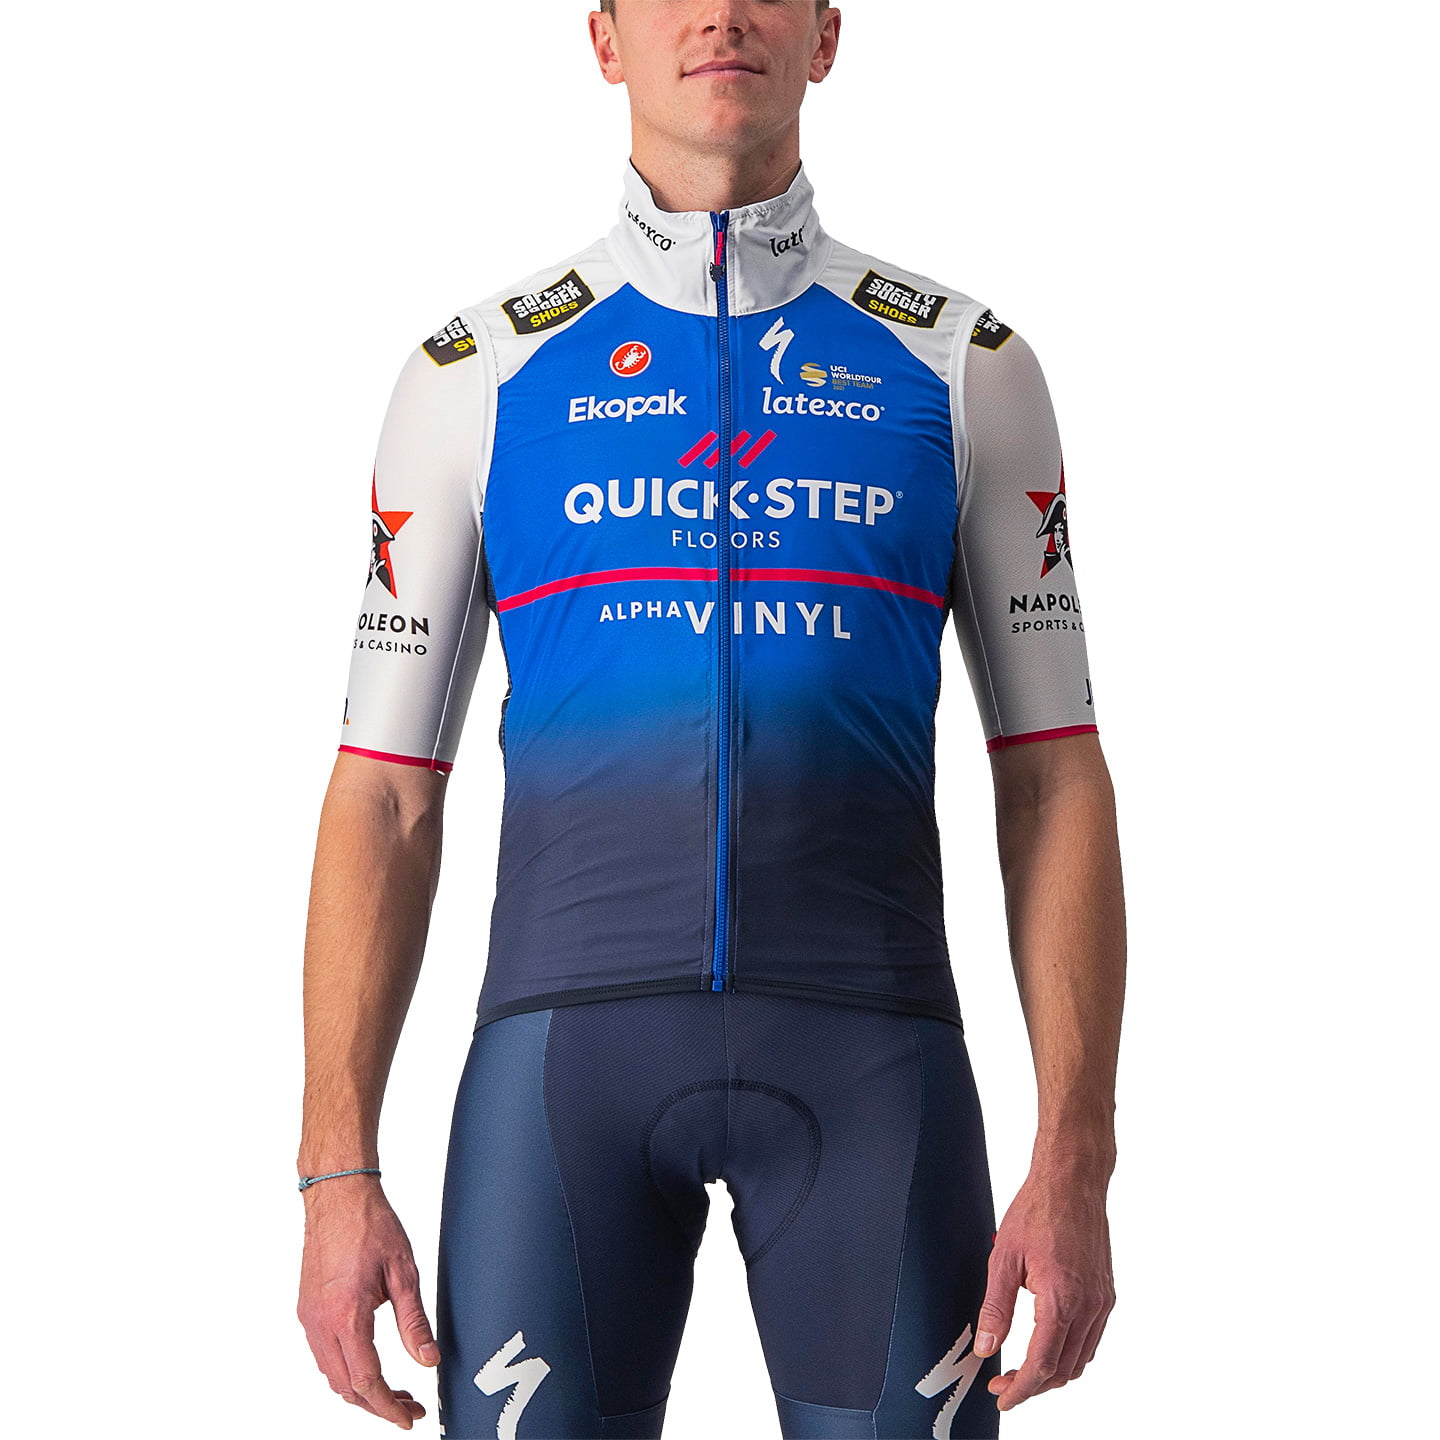 QUICK-STEP ALPHA VINYL 2022 Wind Vest, for men, size M, Cycling vest, Cycle clothing